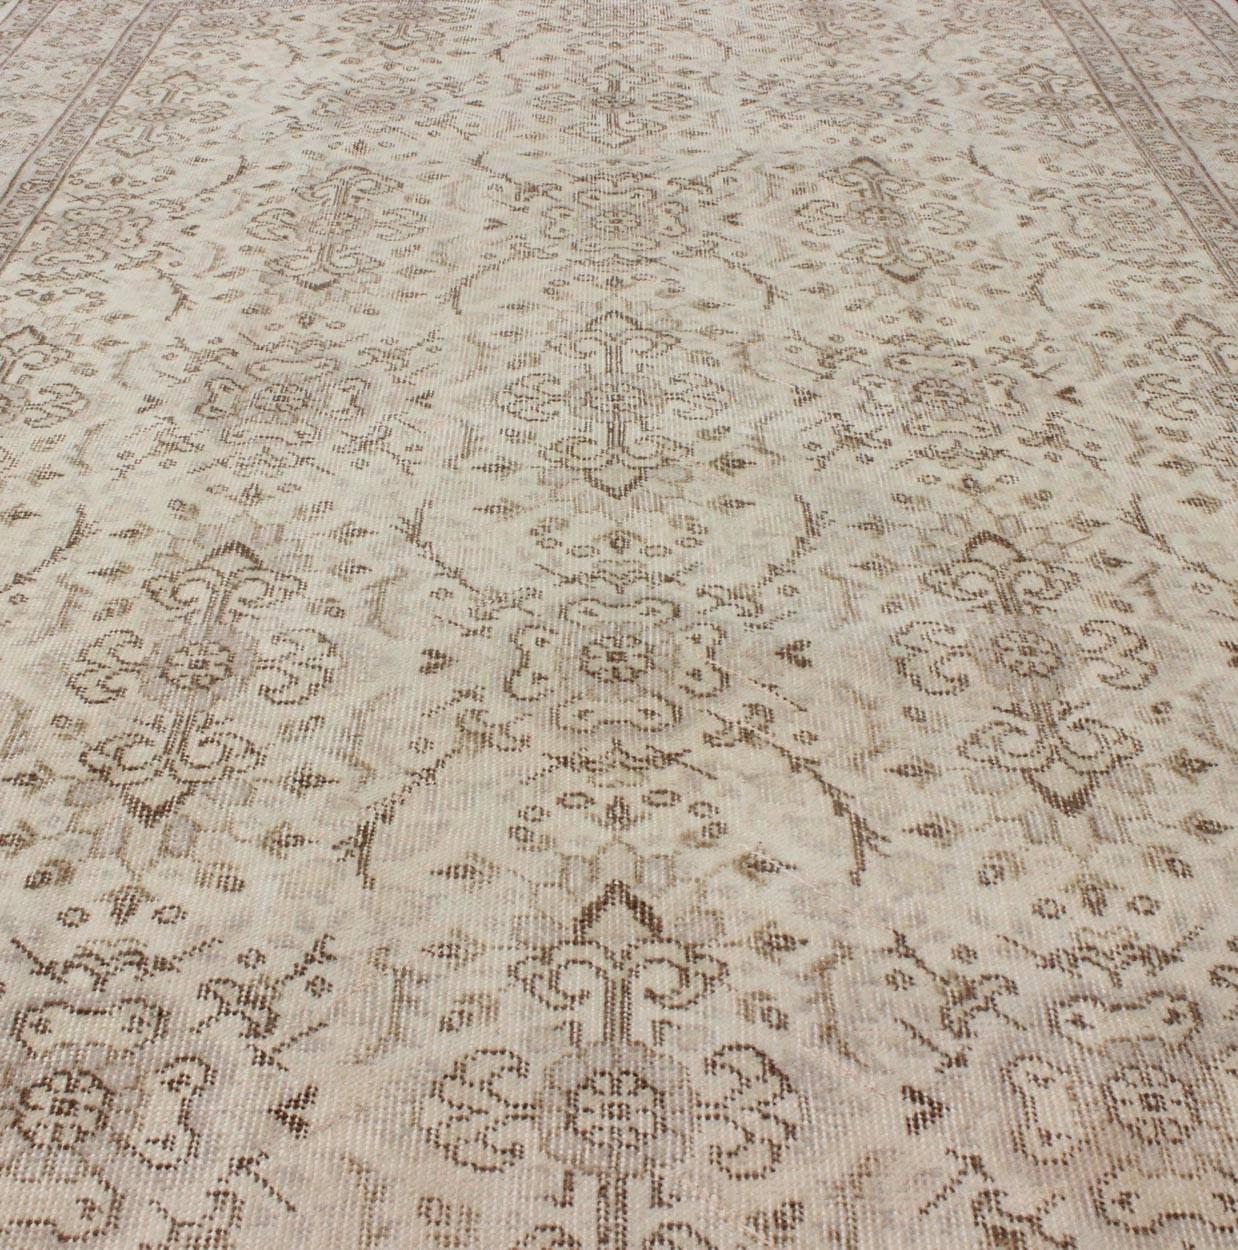 Wool Vintage Turkish Oushak Carpet with Botanical Motifs Set on an Cream Ground For Sale